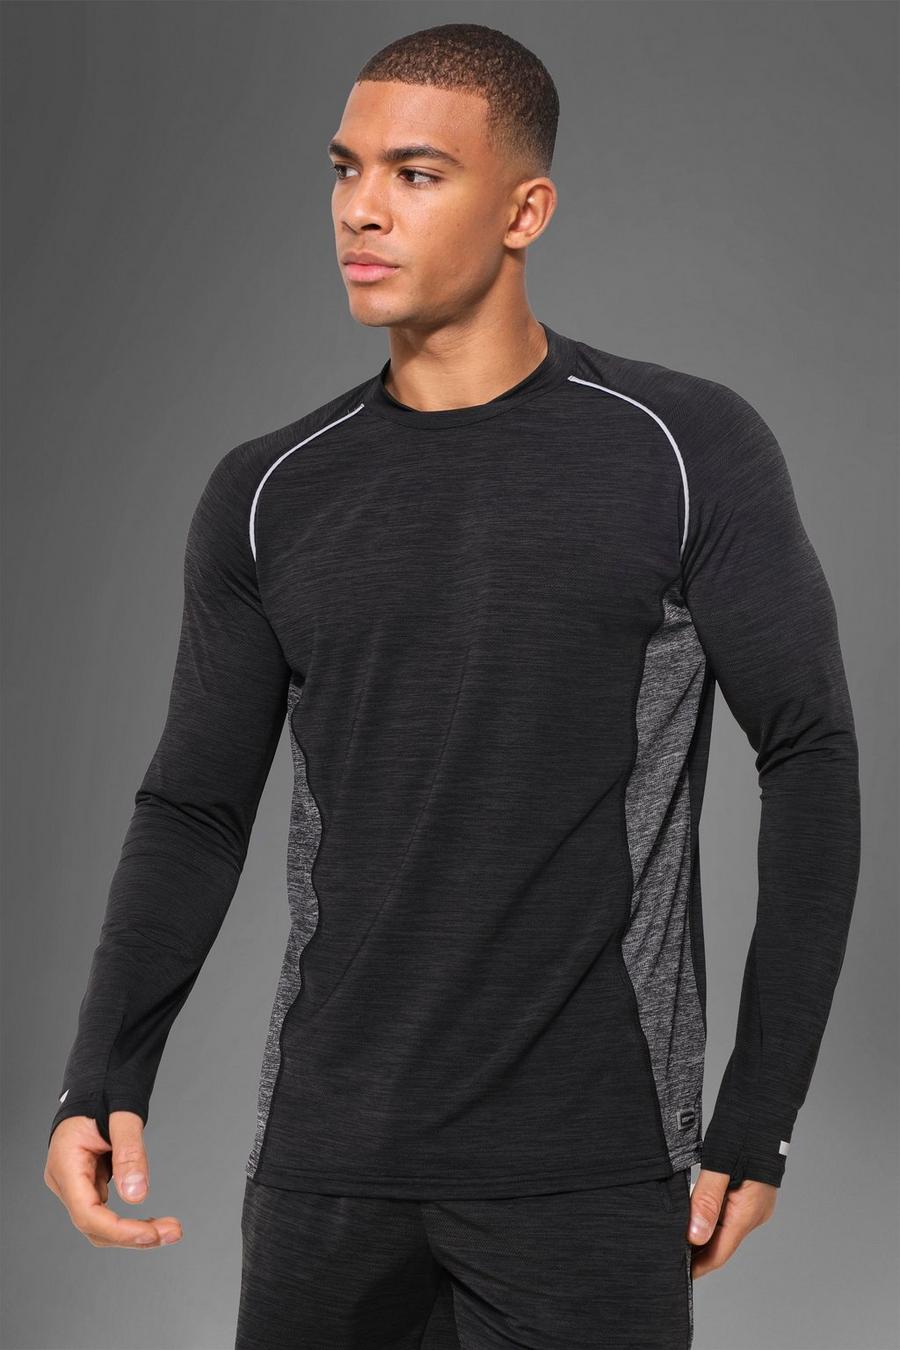 Man Active Fitness Long Sleeve Top aus leichtem Gewebe, Schwarz black